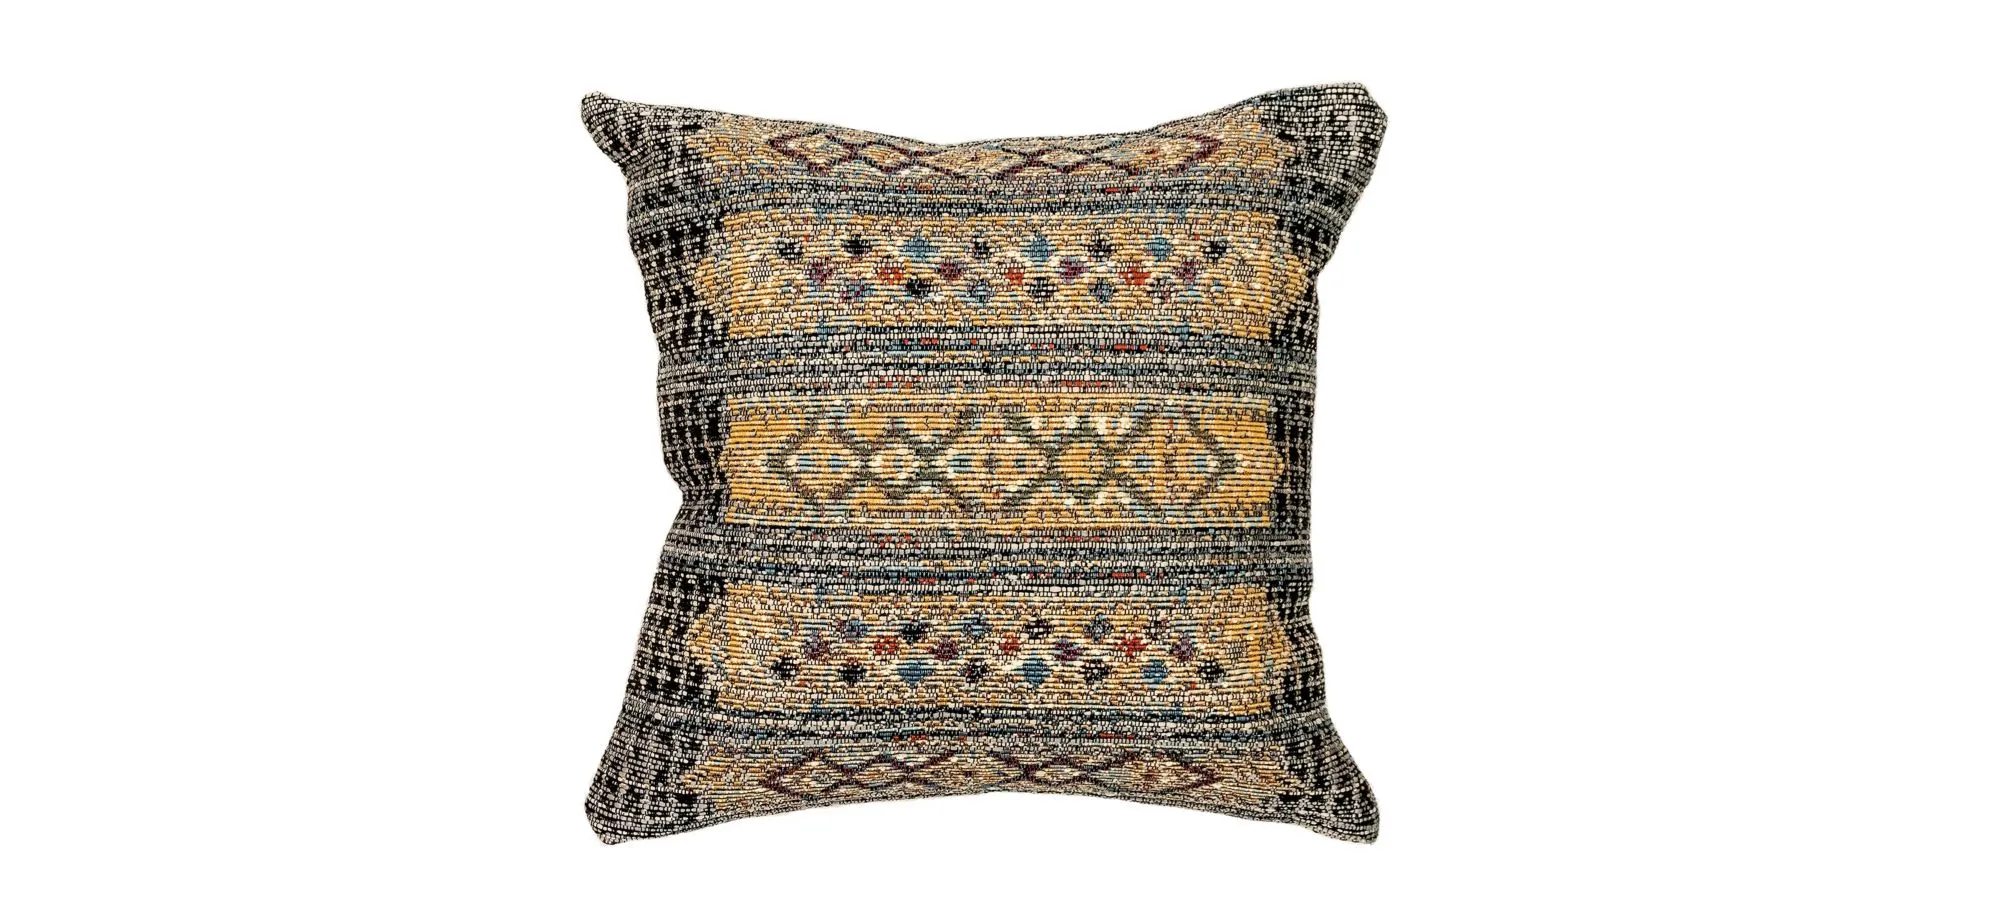 Liora Manne Marina Tribal Stripe Pillow in Black by Trans-Ocean Import Co Inc